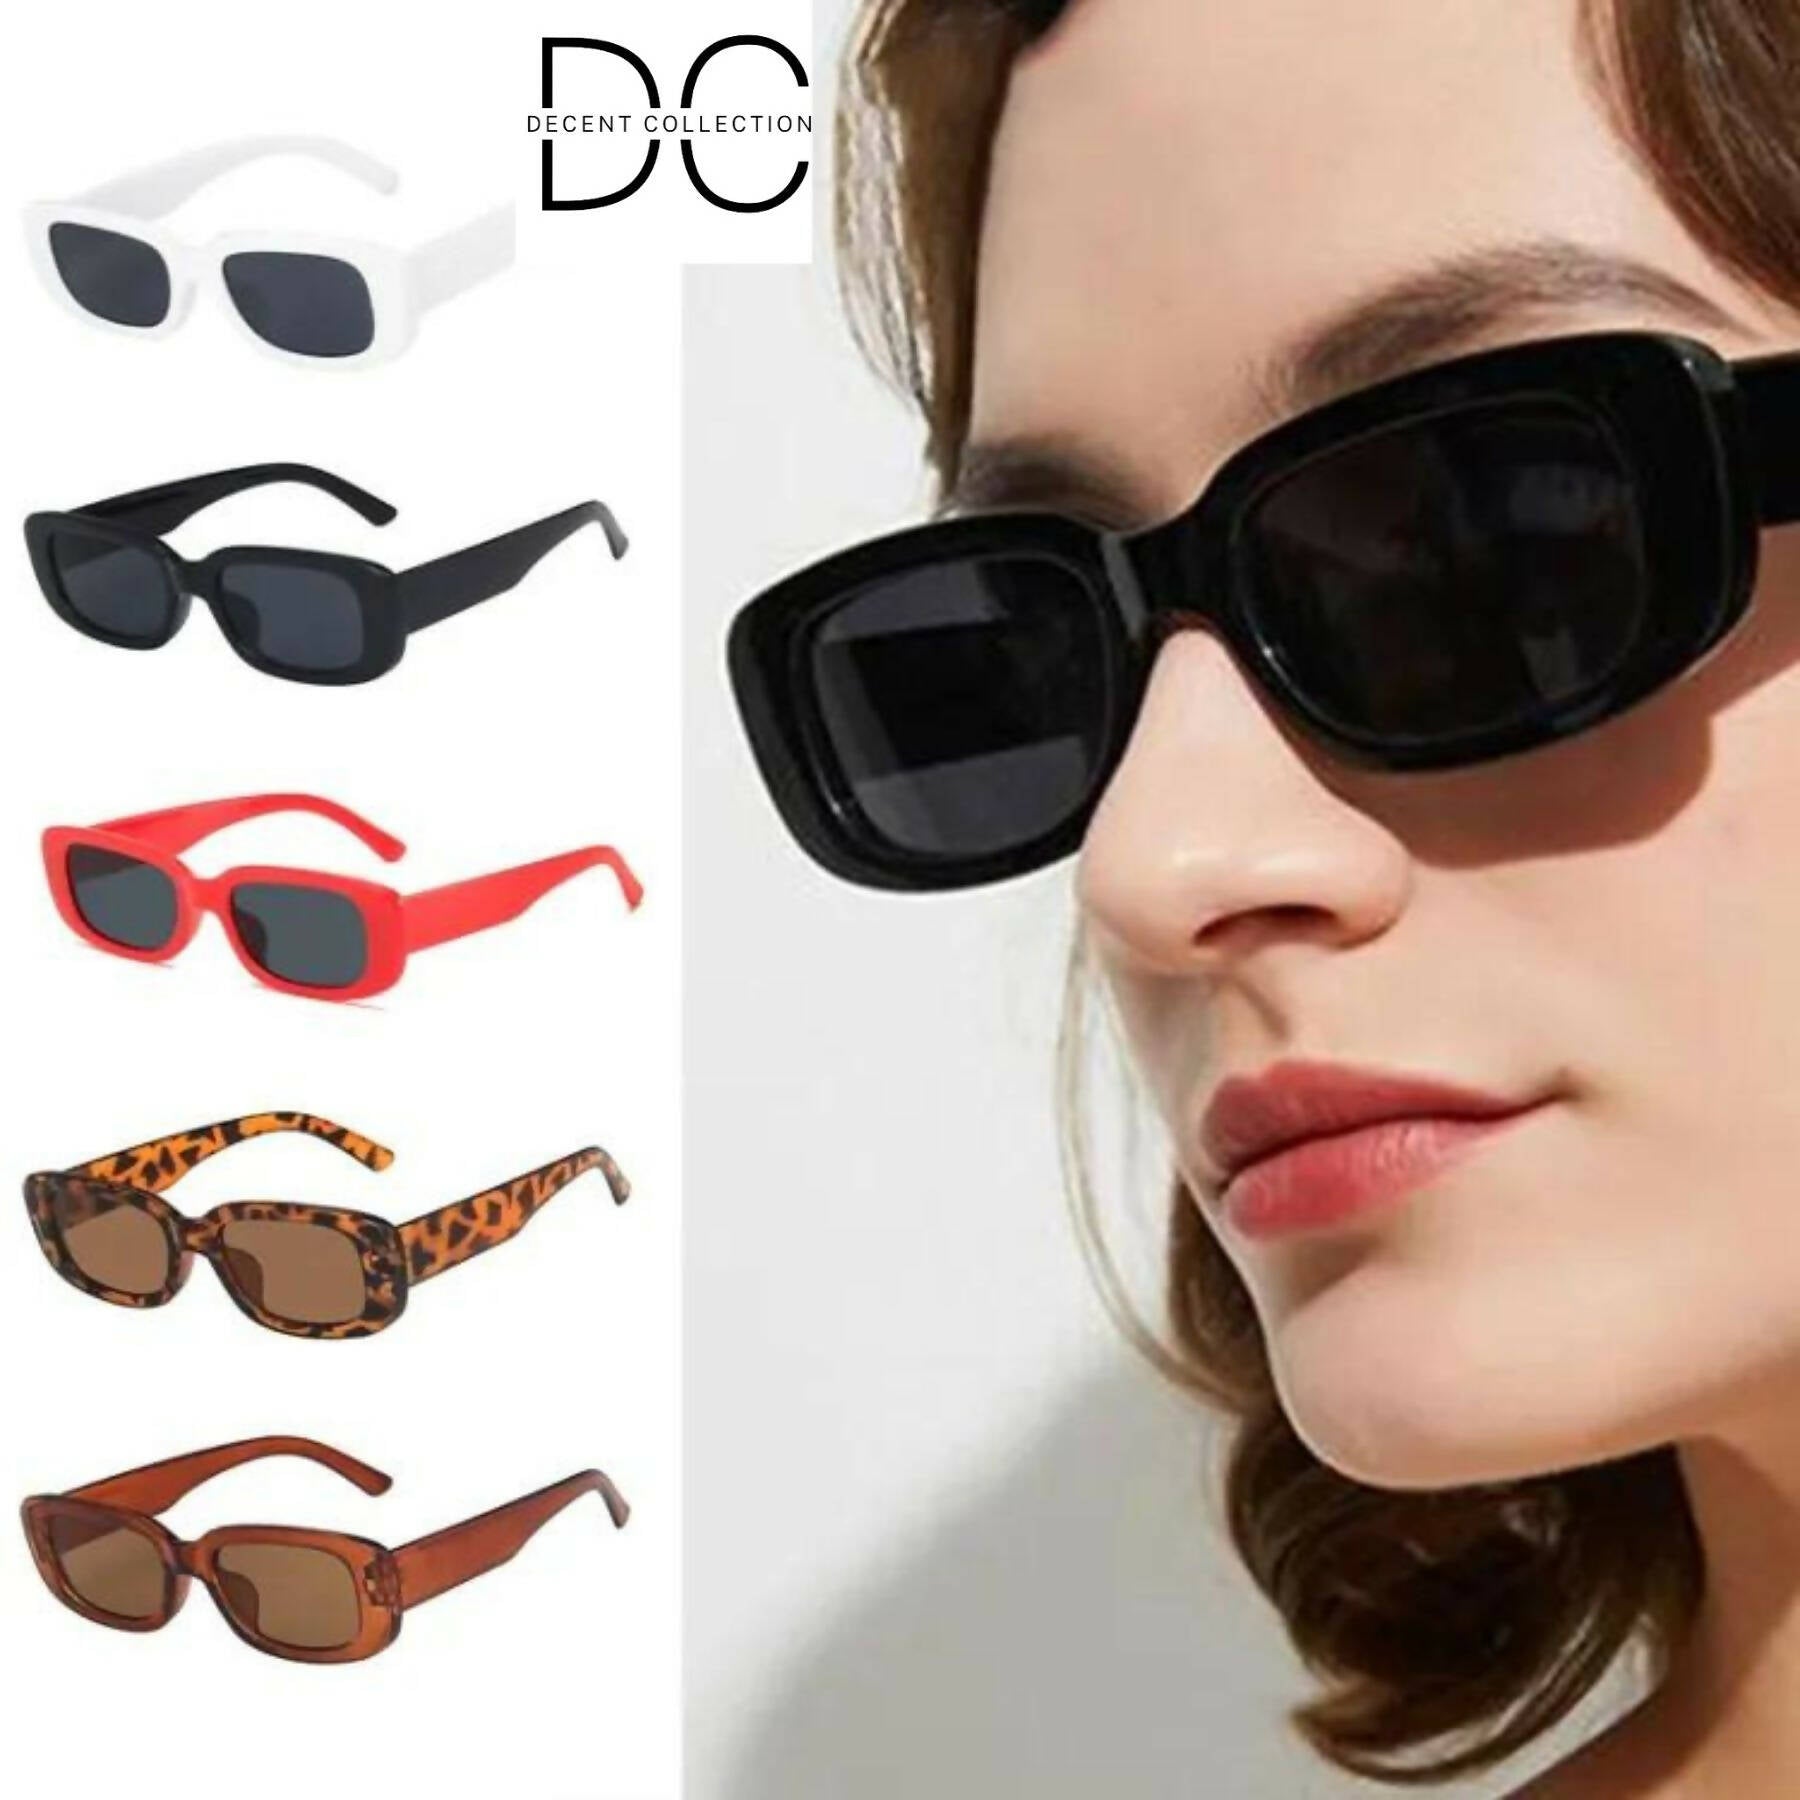 DC Classic Rectangle Frame Sunglasses 